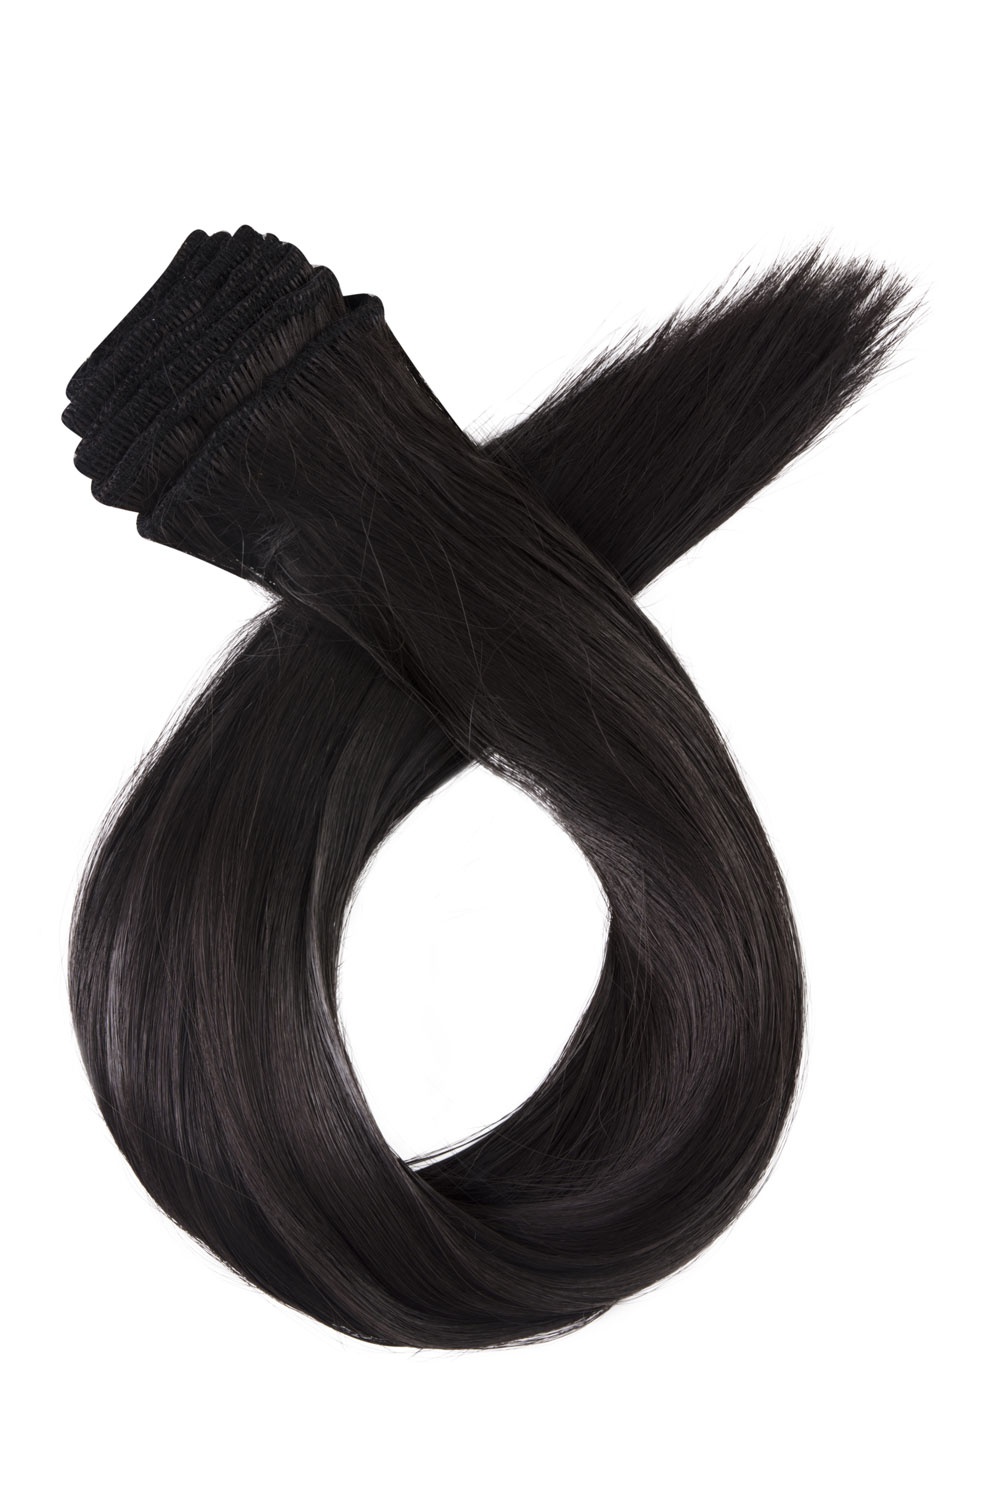 Stredne hnedé clip in vlasy, 60cm, 115g, farba 4